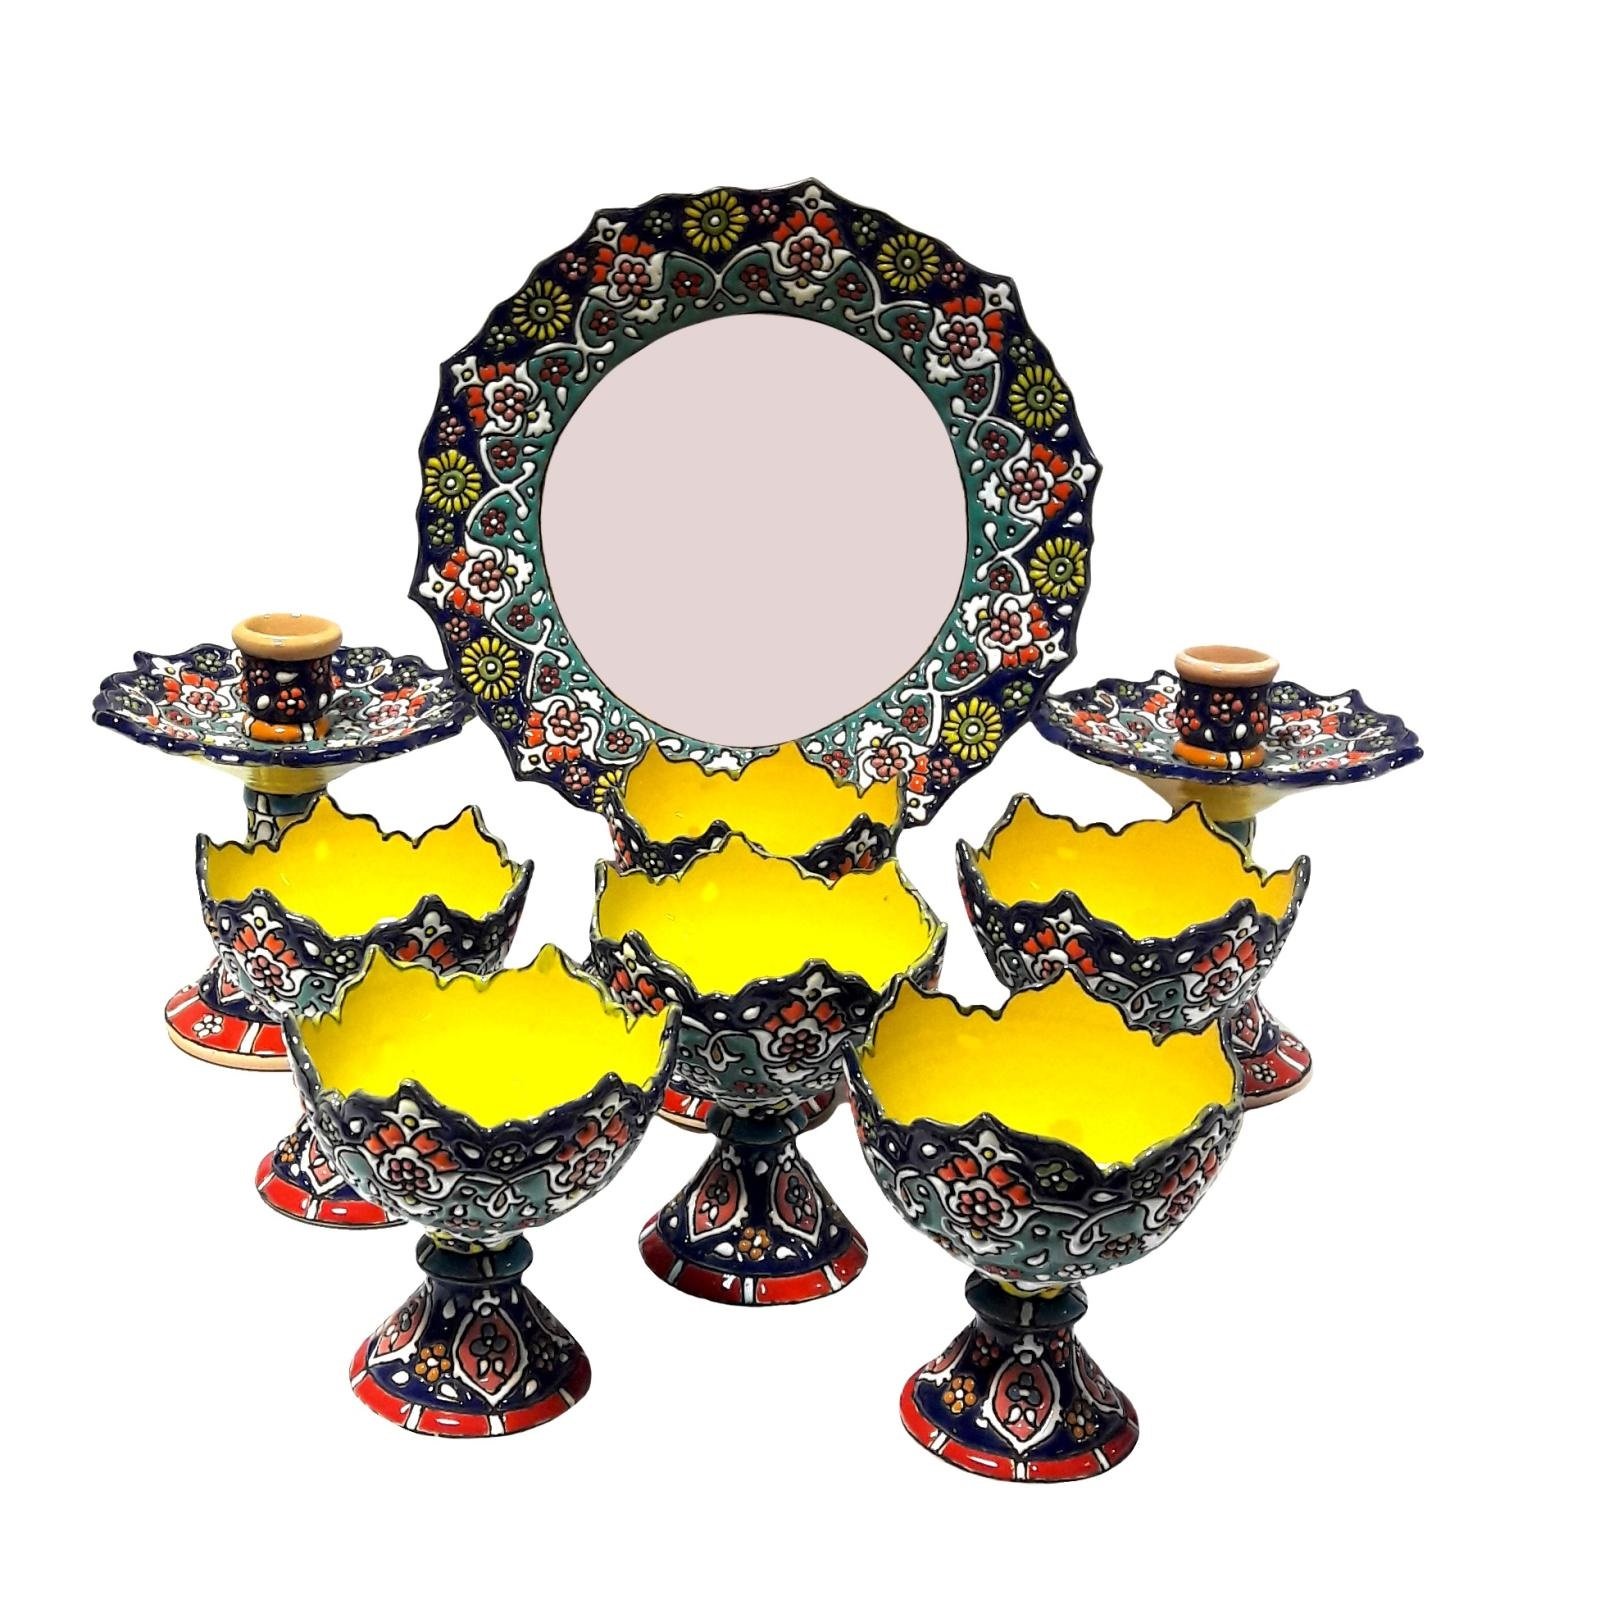 Enamel Handicraft pottery Candlestick and mirror and bowl code 9009 collection 9 pcs,émail, plats en émail, artisanat émail